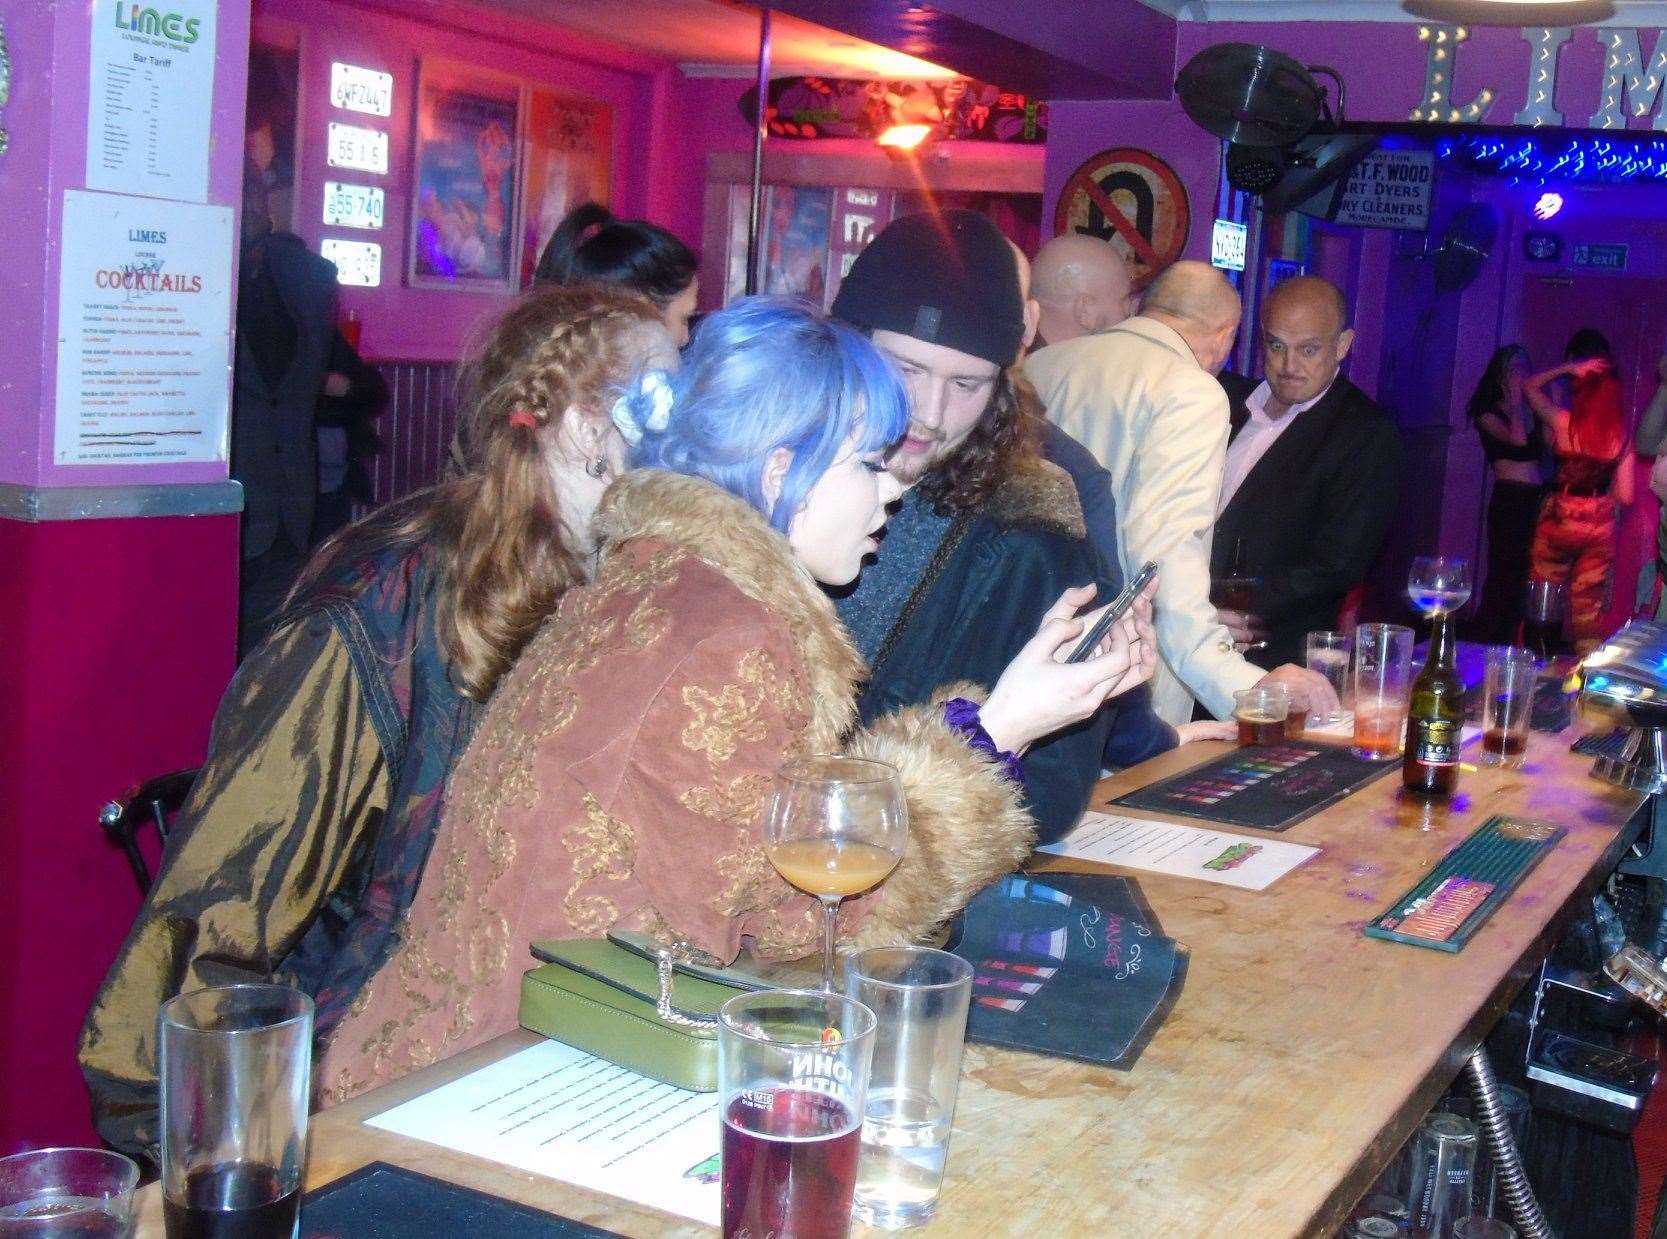 Visitors enjoying a drink at The Limes bar